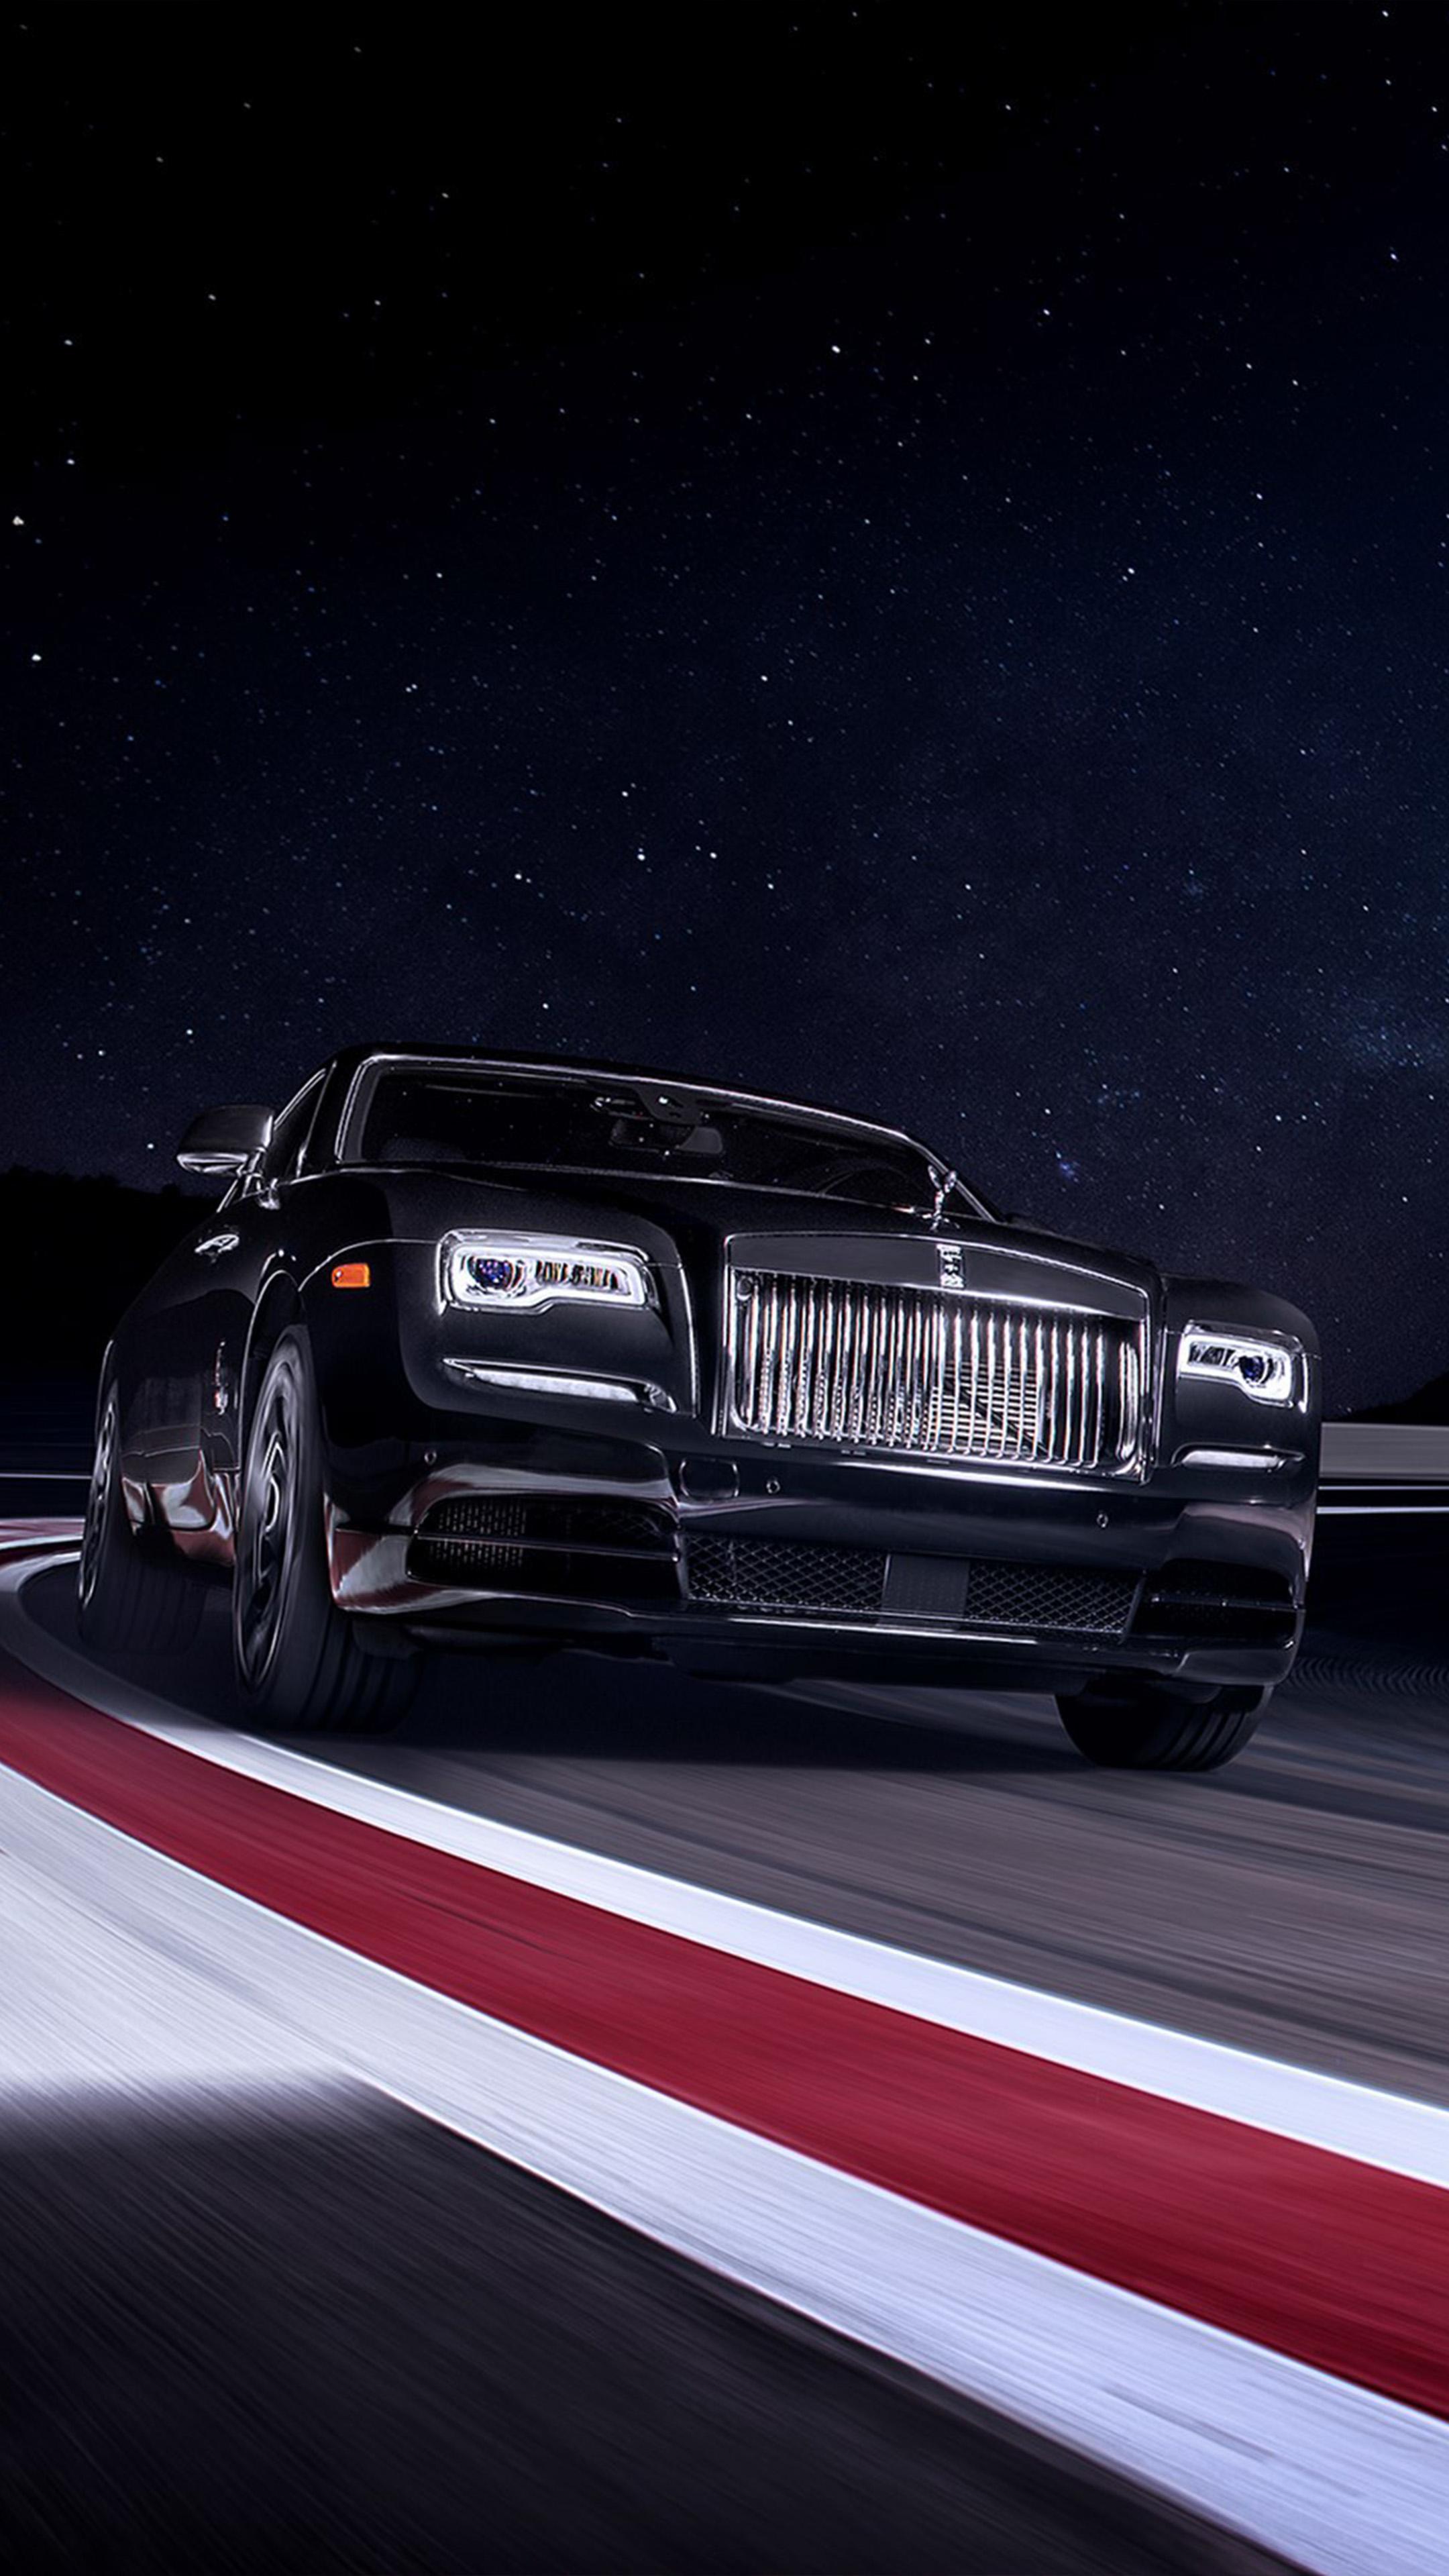 Rolls Royce Black Badge Wraith On Race Track 4k Ultra HD Mobile